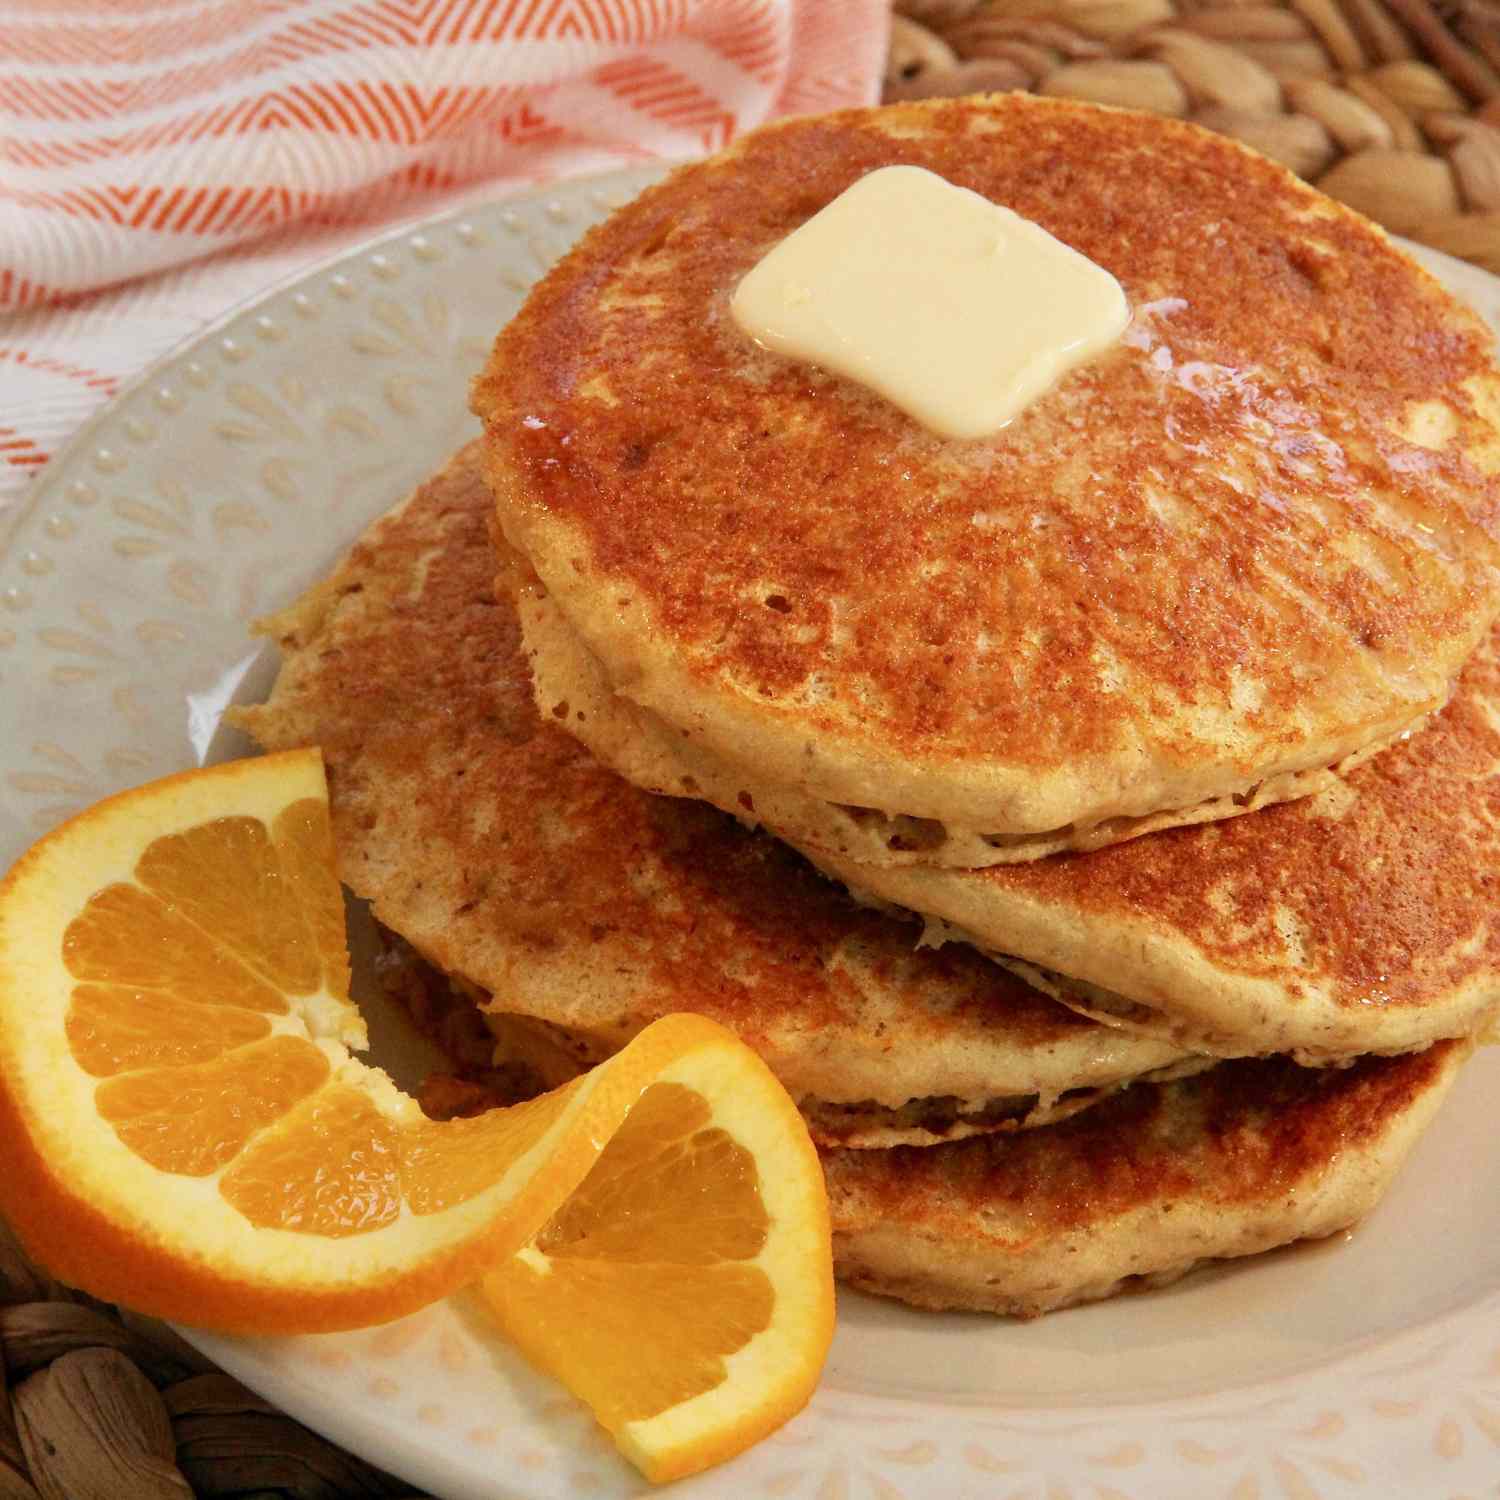 Orange Pancakes on a plate with an orange twist